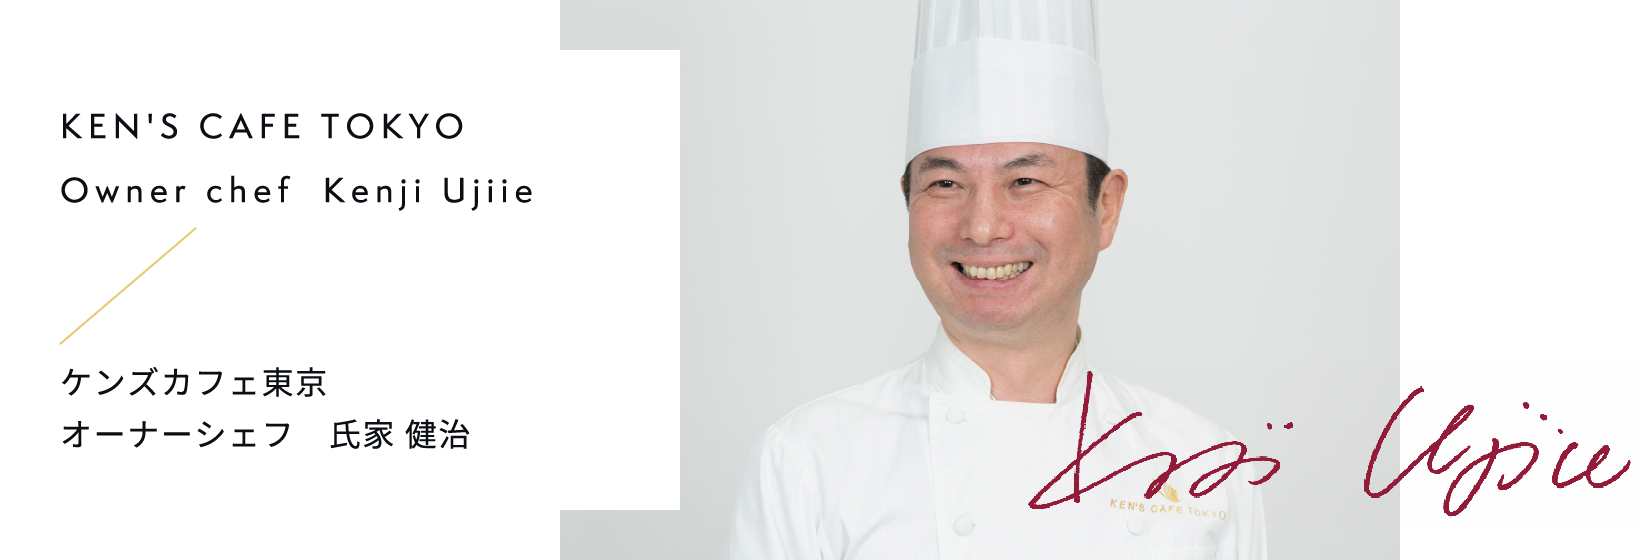 KEN'S CAFE TOKYO Owner chef Kenji Ujiie / ケンズカフェ東京 オーナーシェフ 氏家 健治